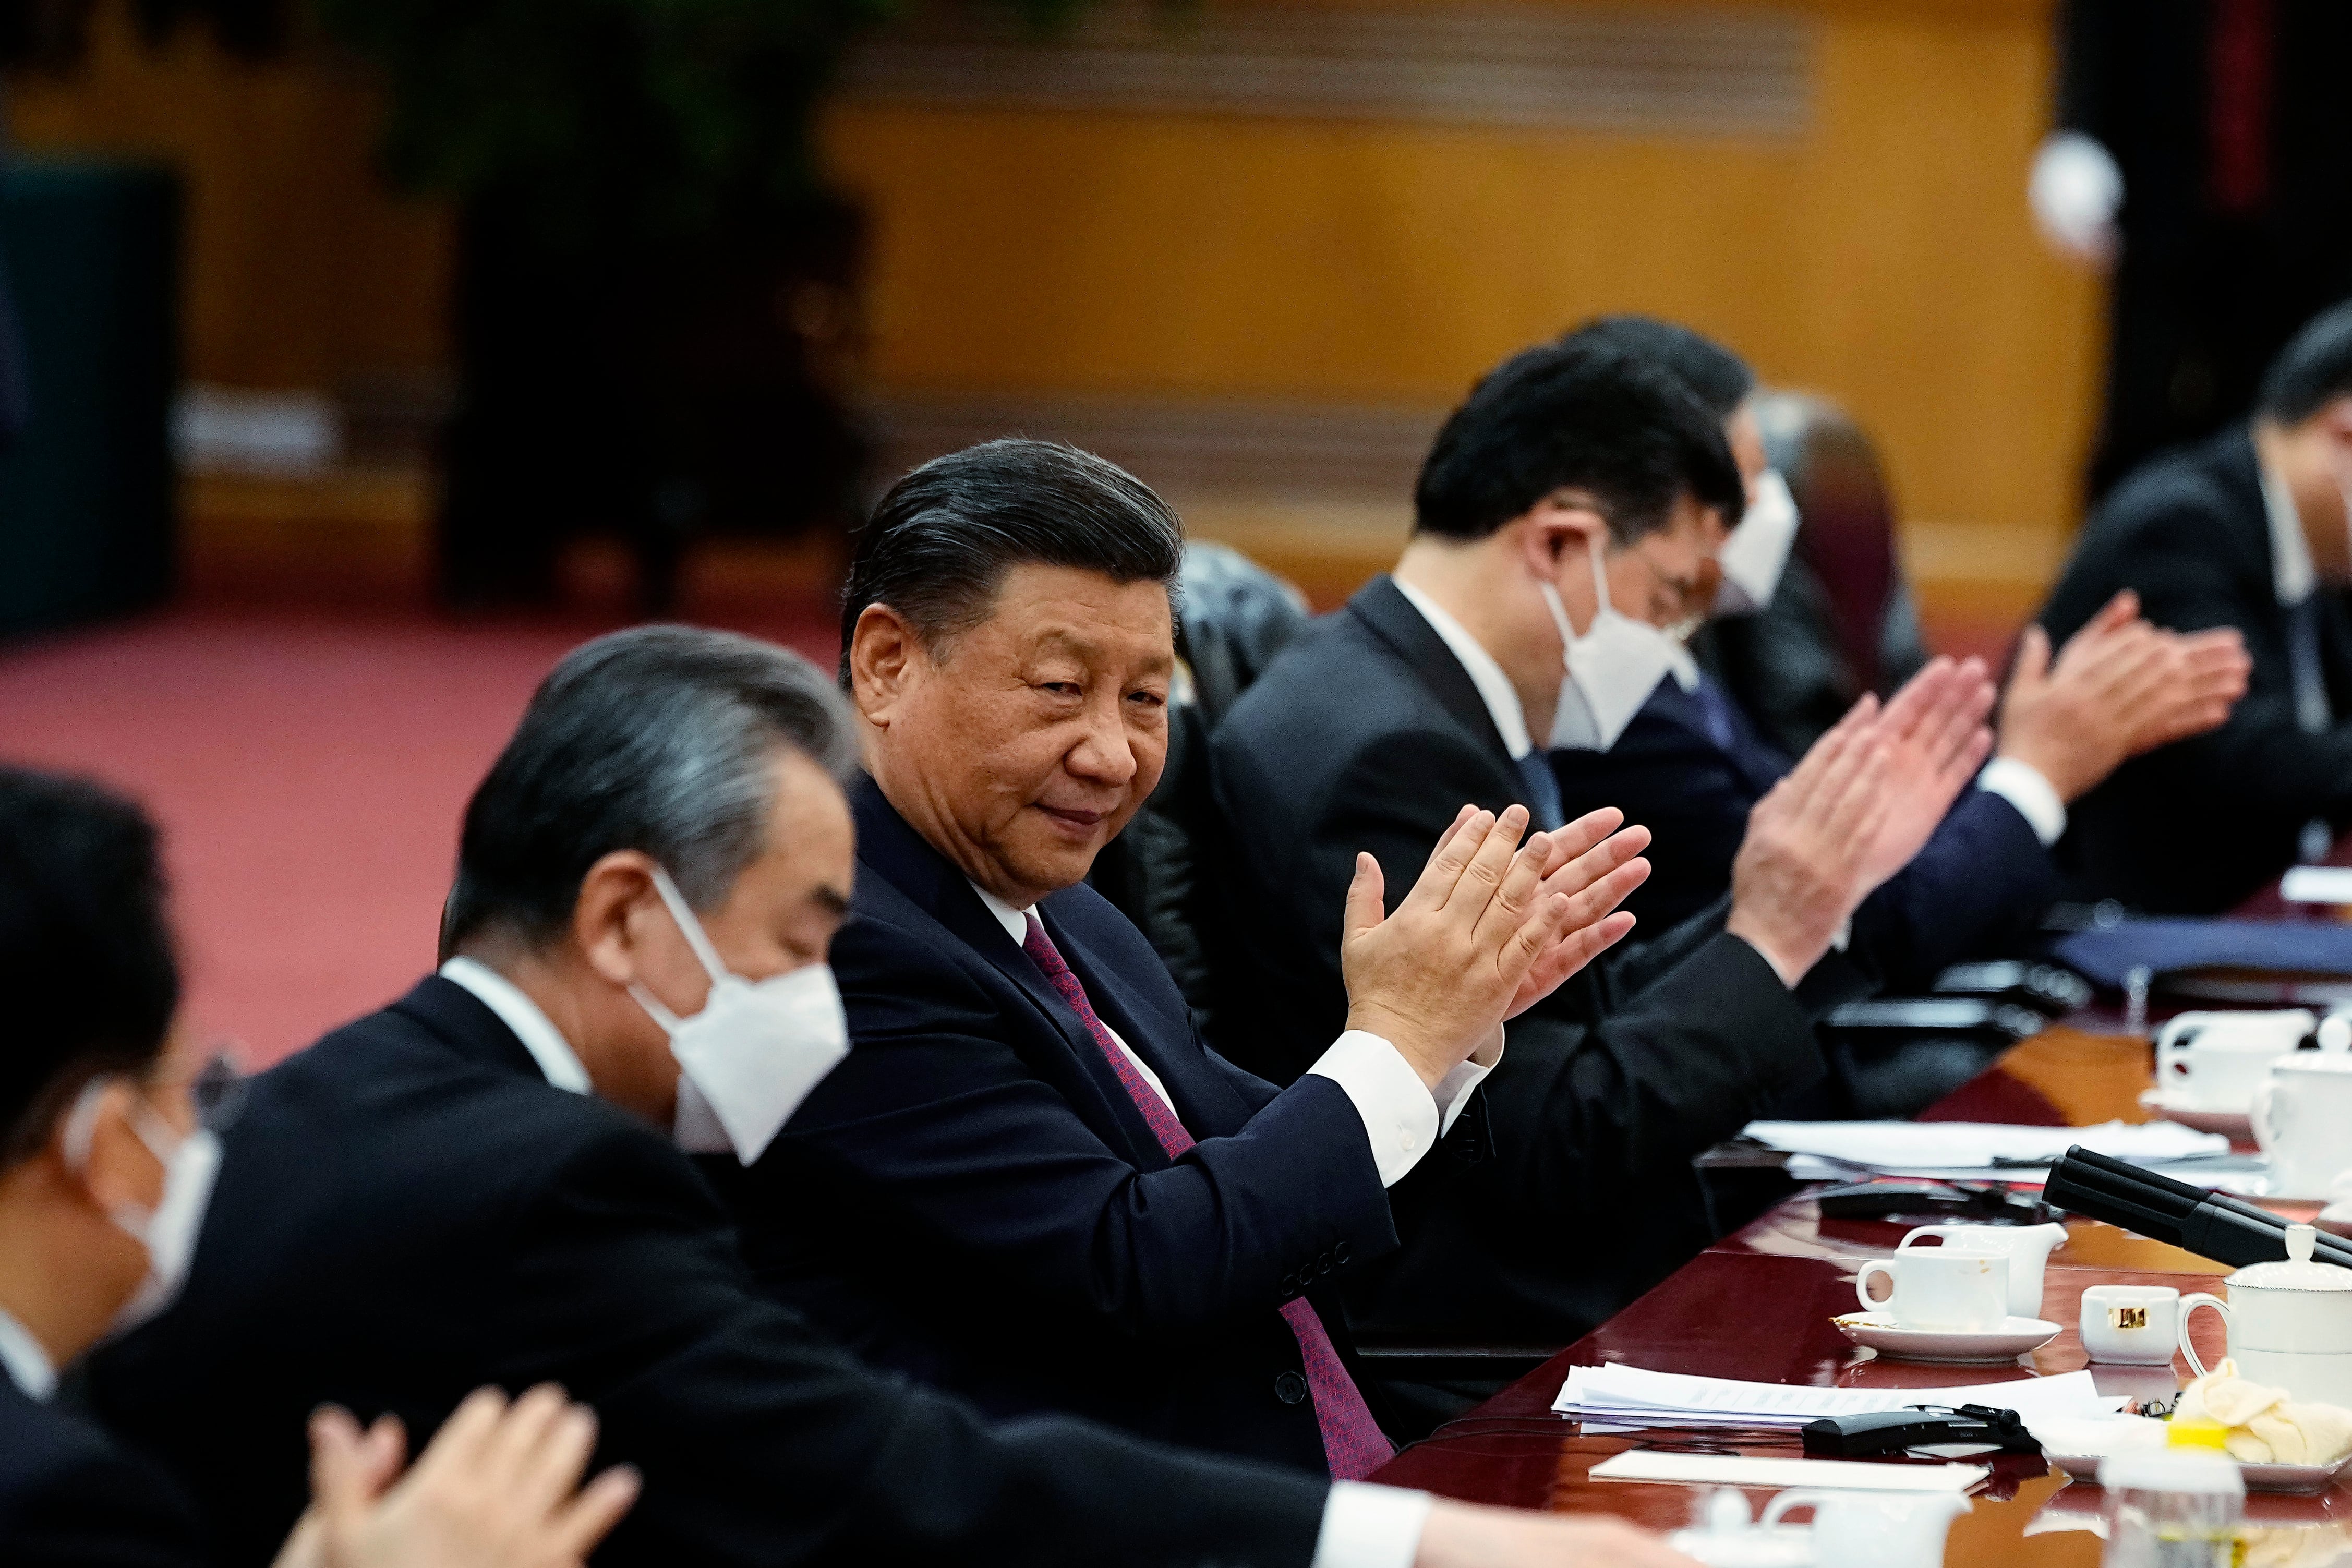 El presidente chino, Xi Jinping, aplaude durante un encuentro con su homólogo de Gabón, Alí Bongo Ondimba, este miércoles en Pekín.